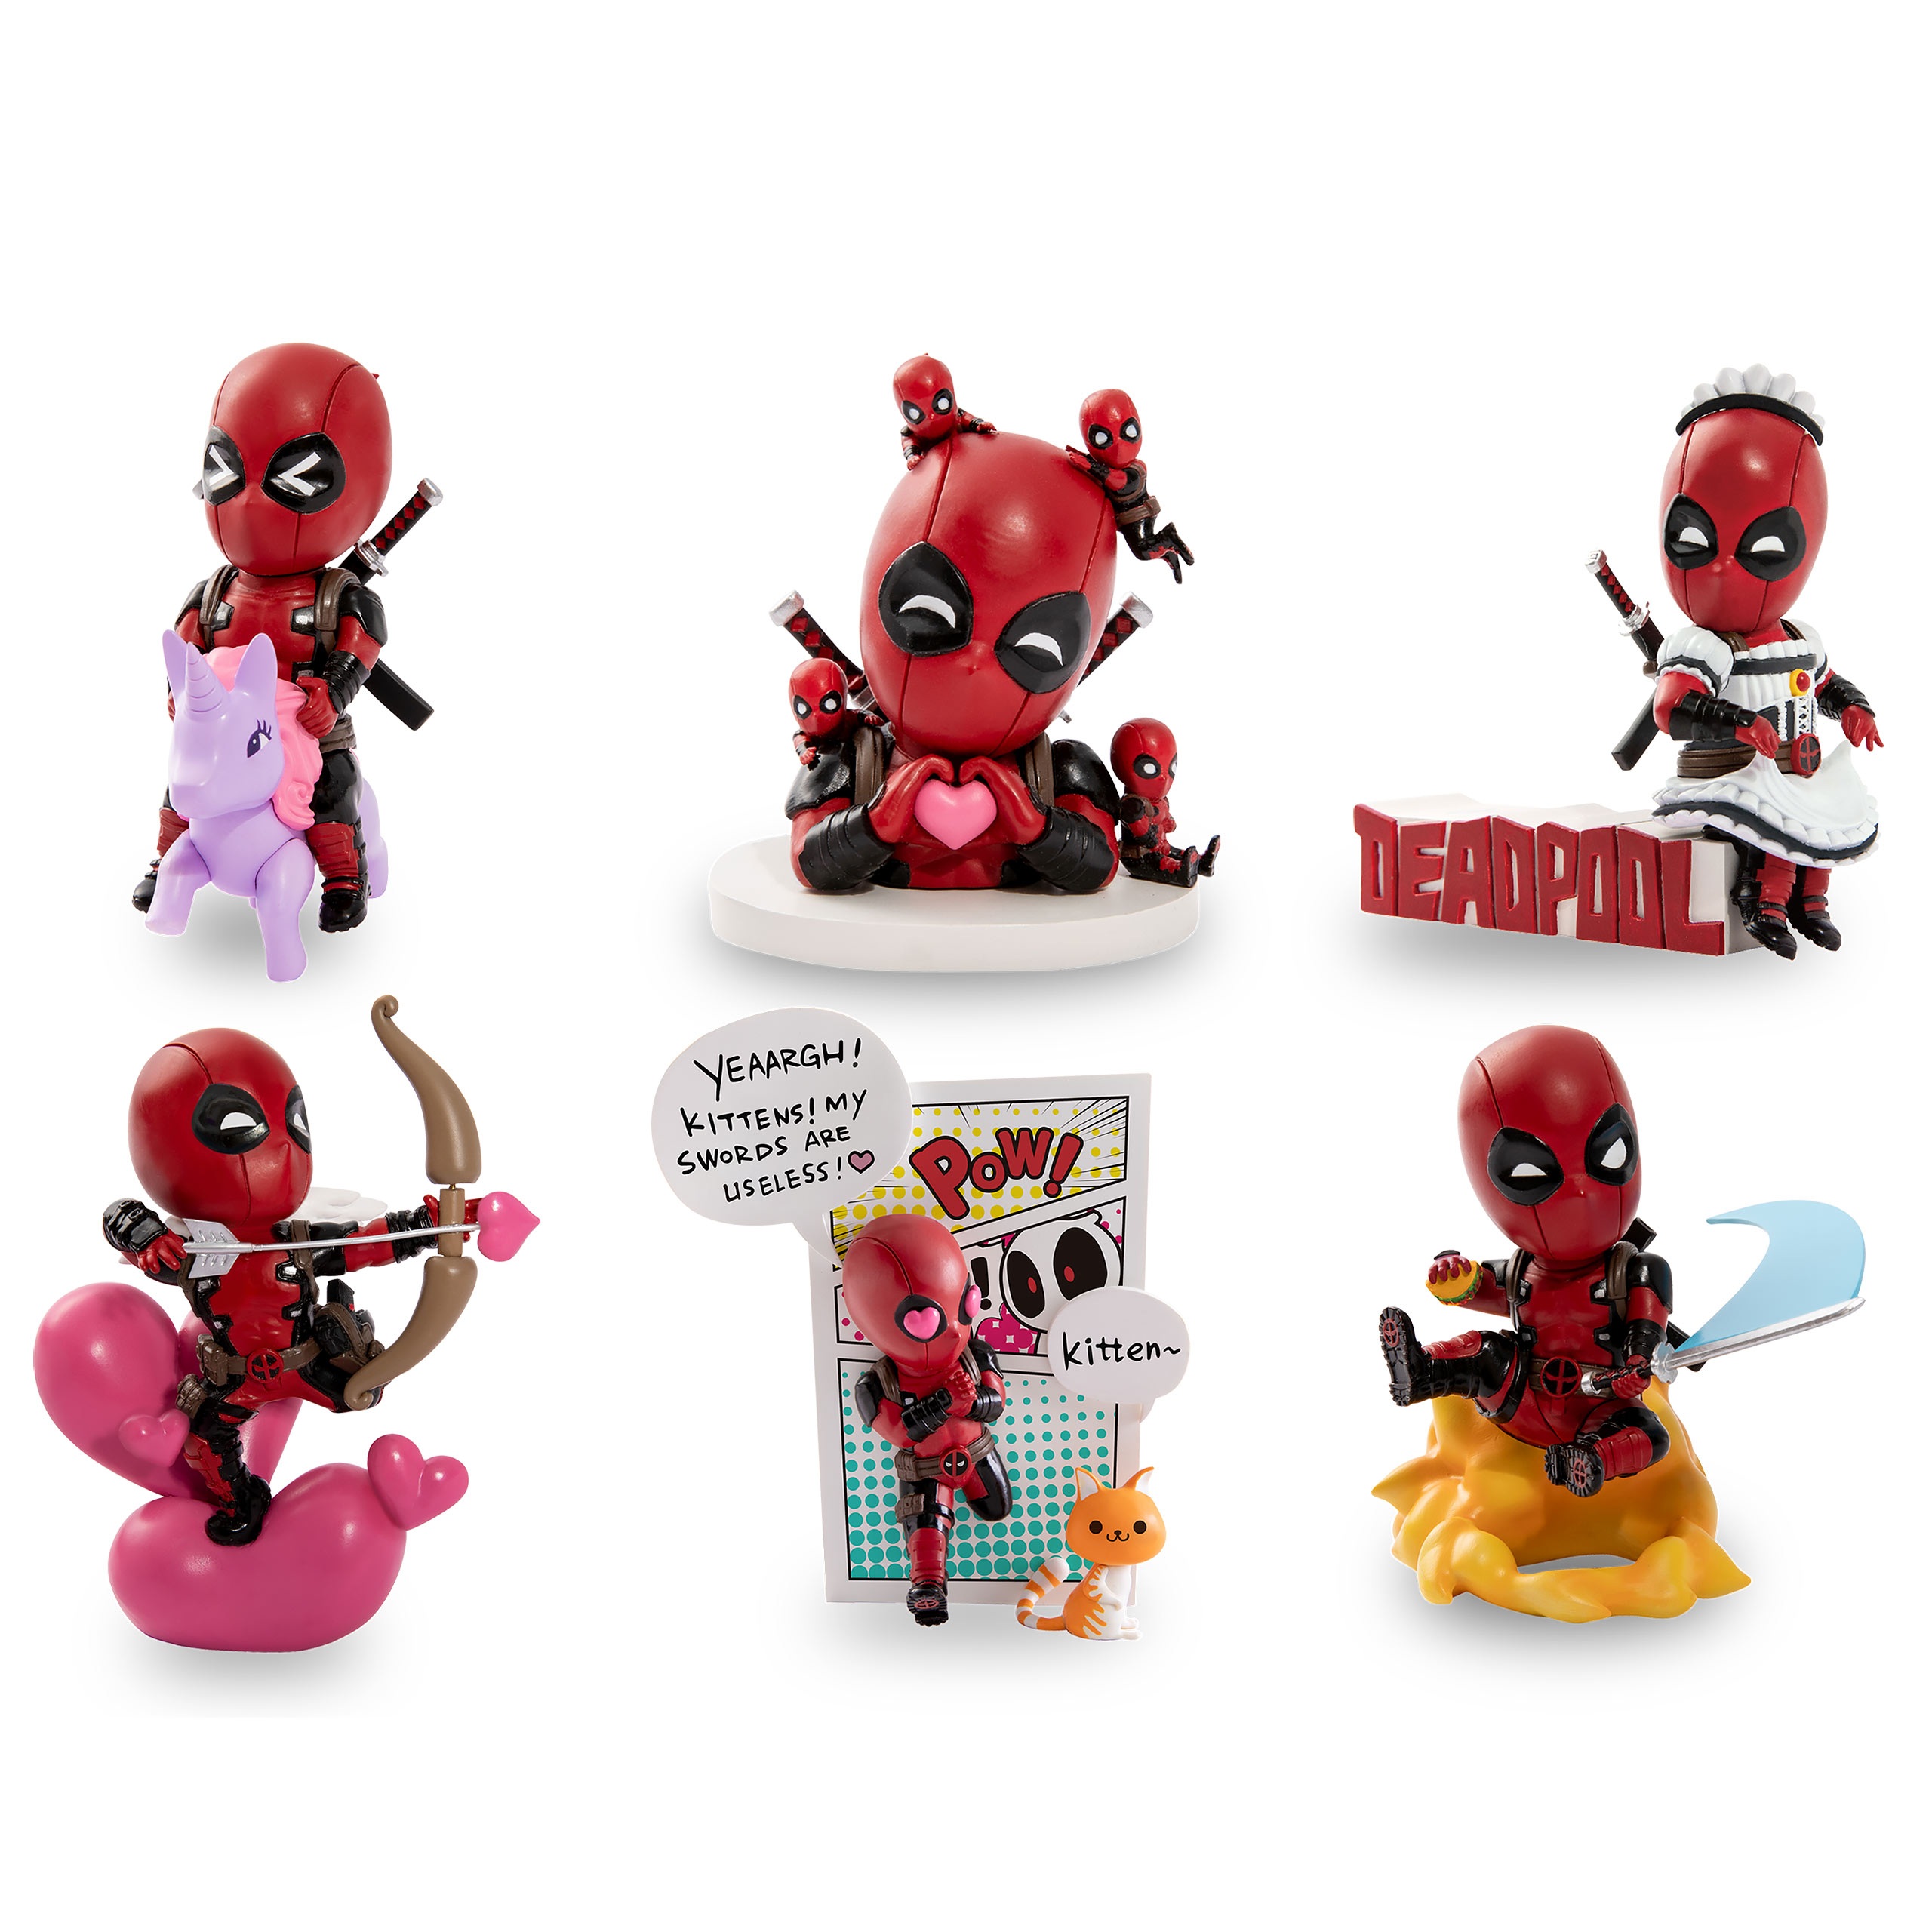 Deadpool - YuMe Hero Box Série Classique Figurine Mystère